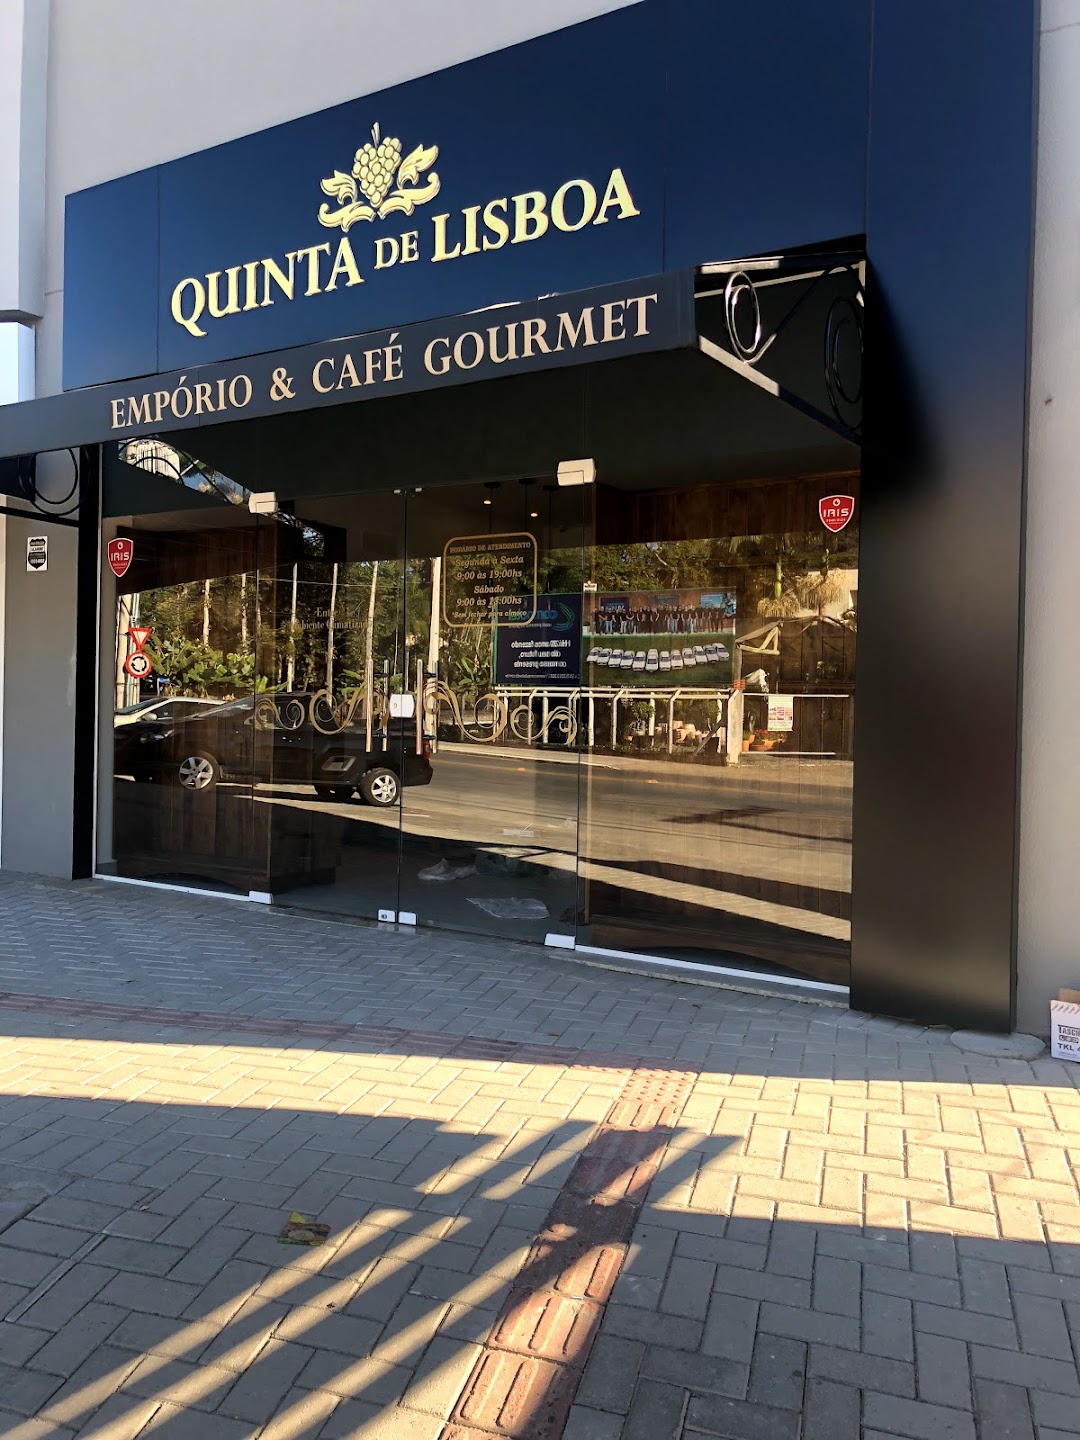 Quinta de Lisboa - Empório e Café Gourmet